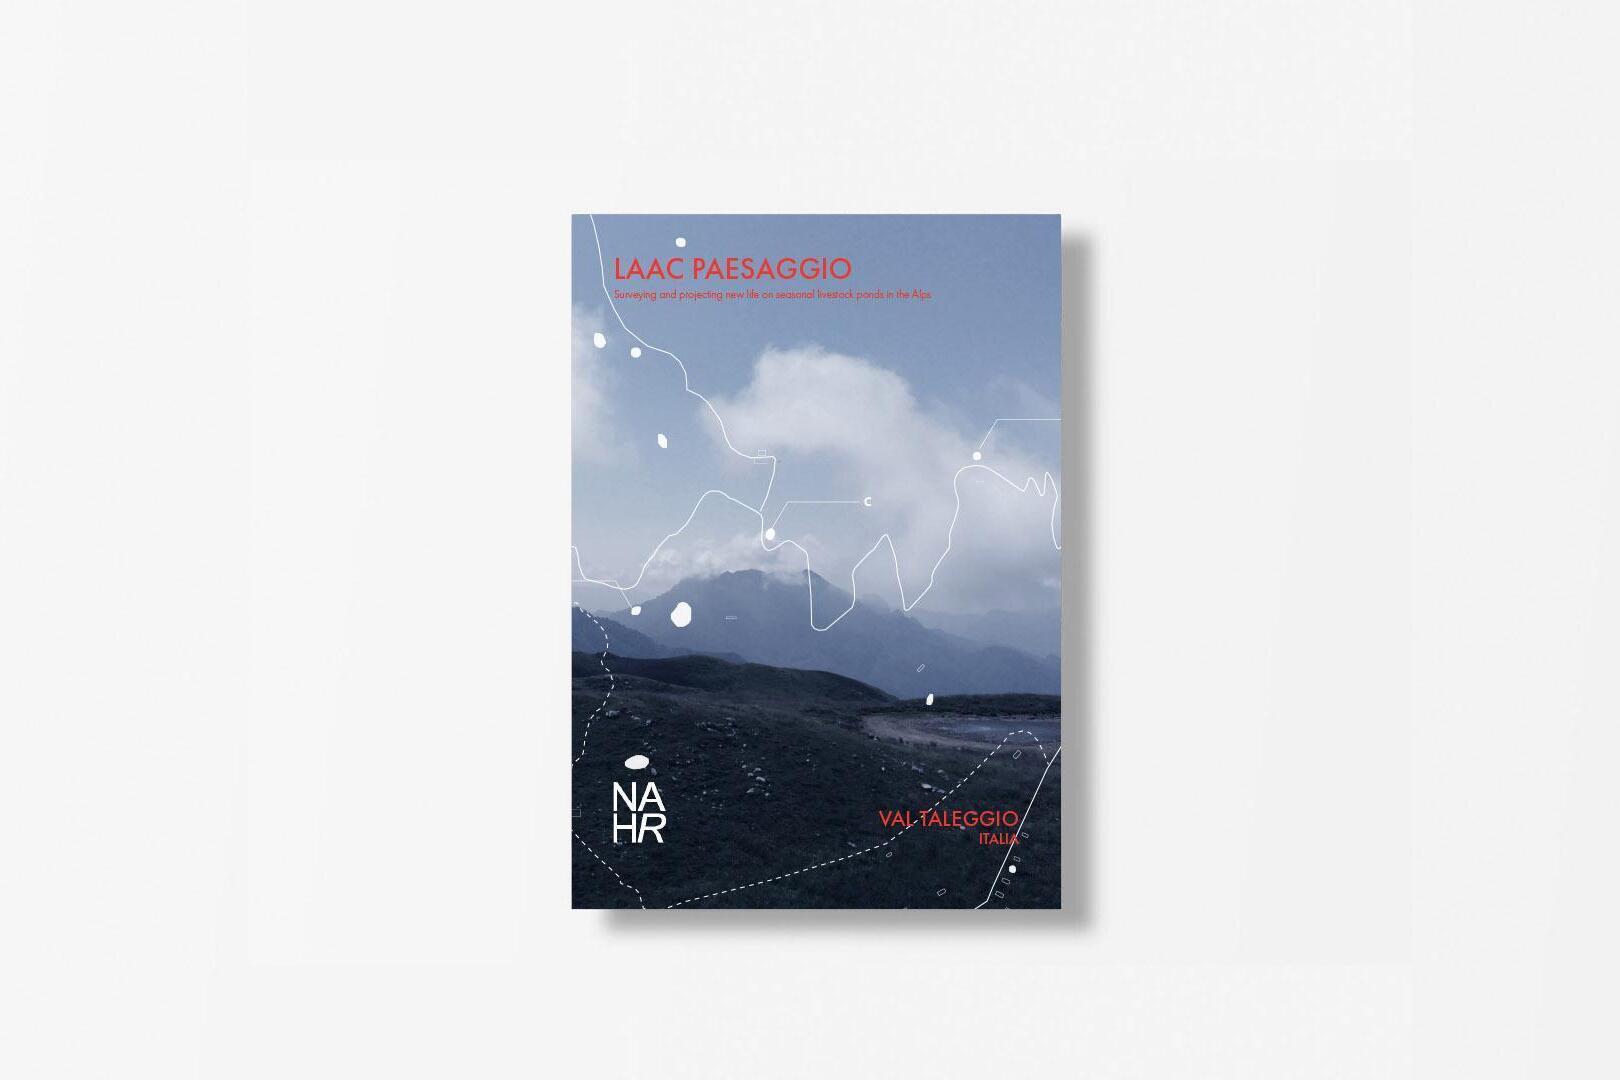 Laac Paesaggio book cover